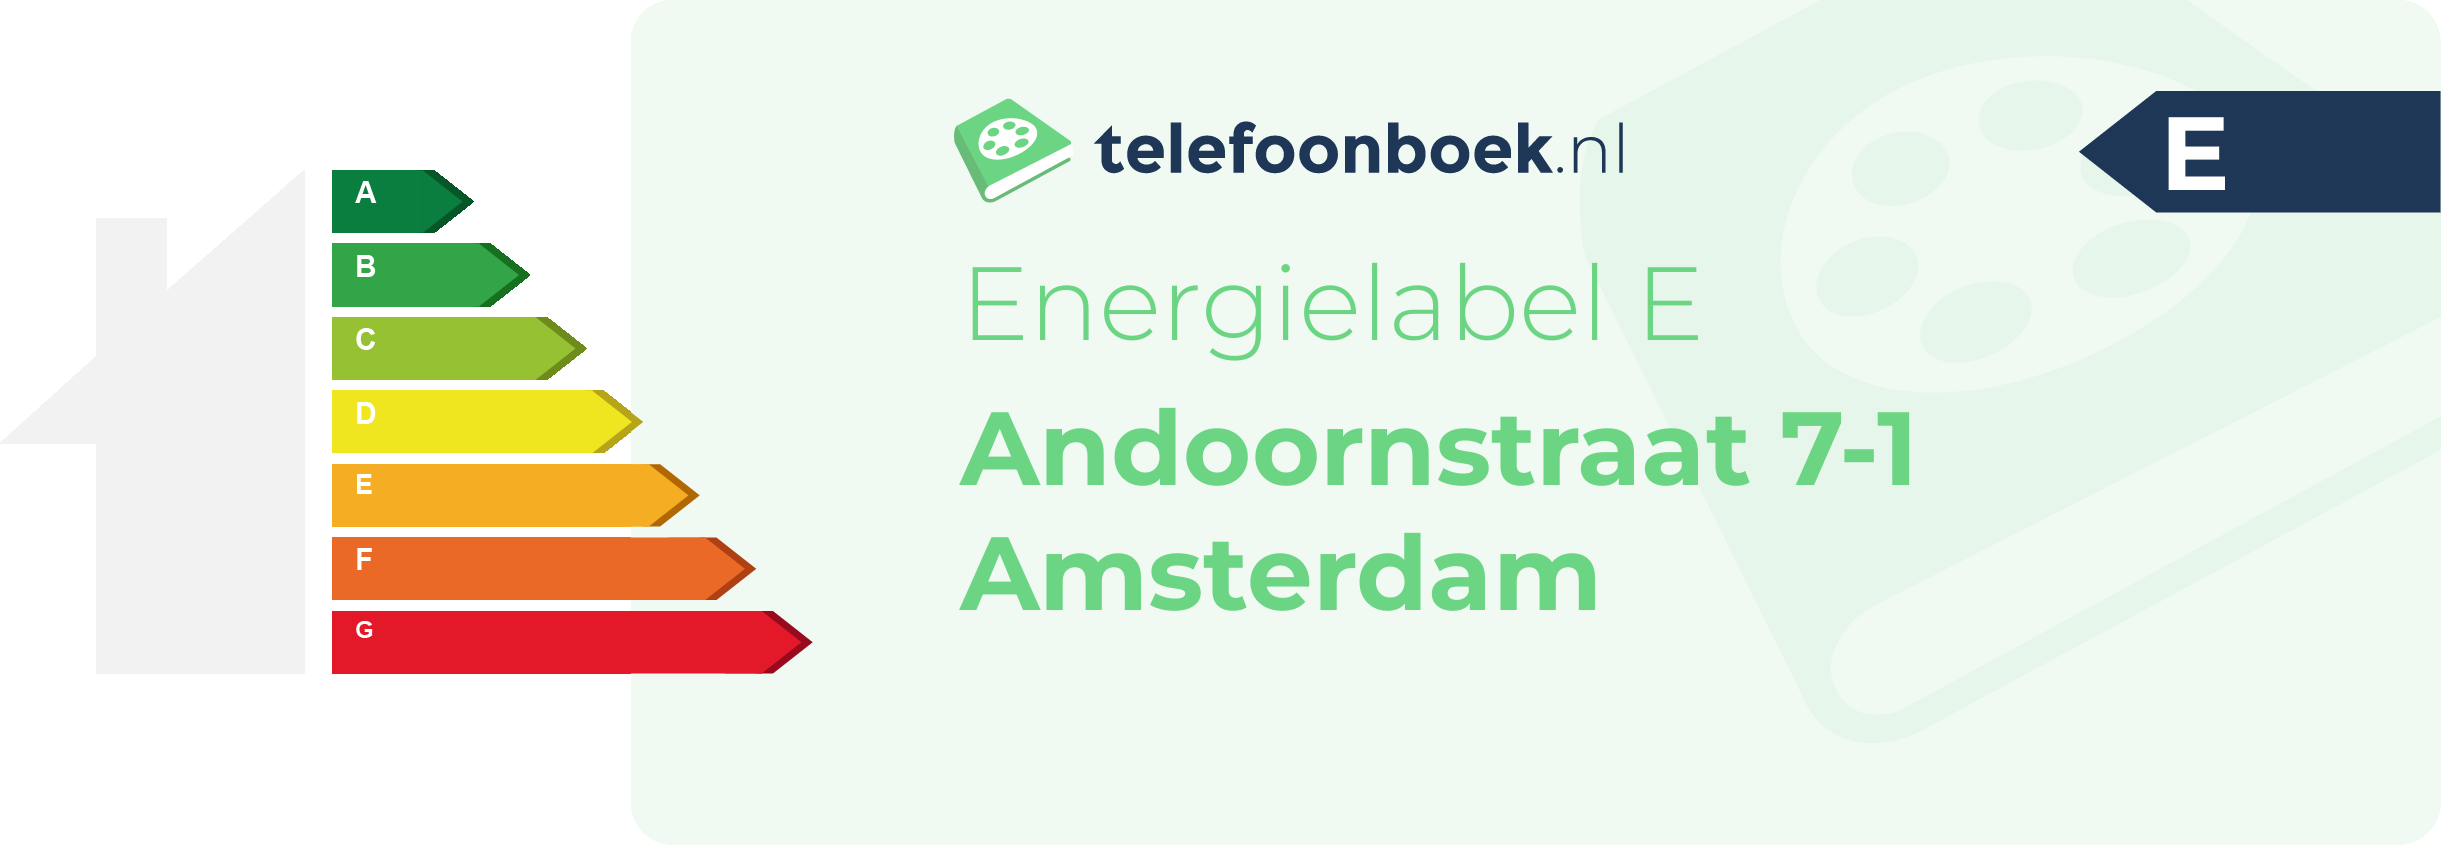 Energielabel Andoornstraat 7-1 Amsterdam